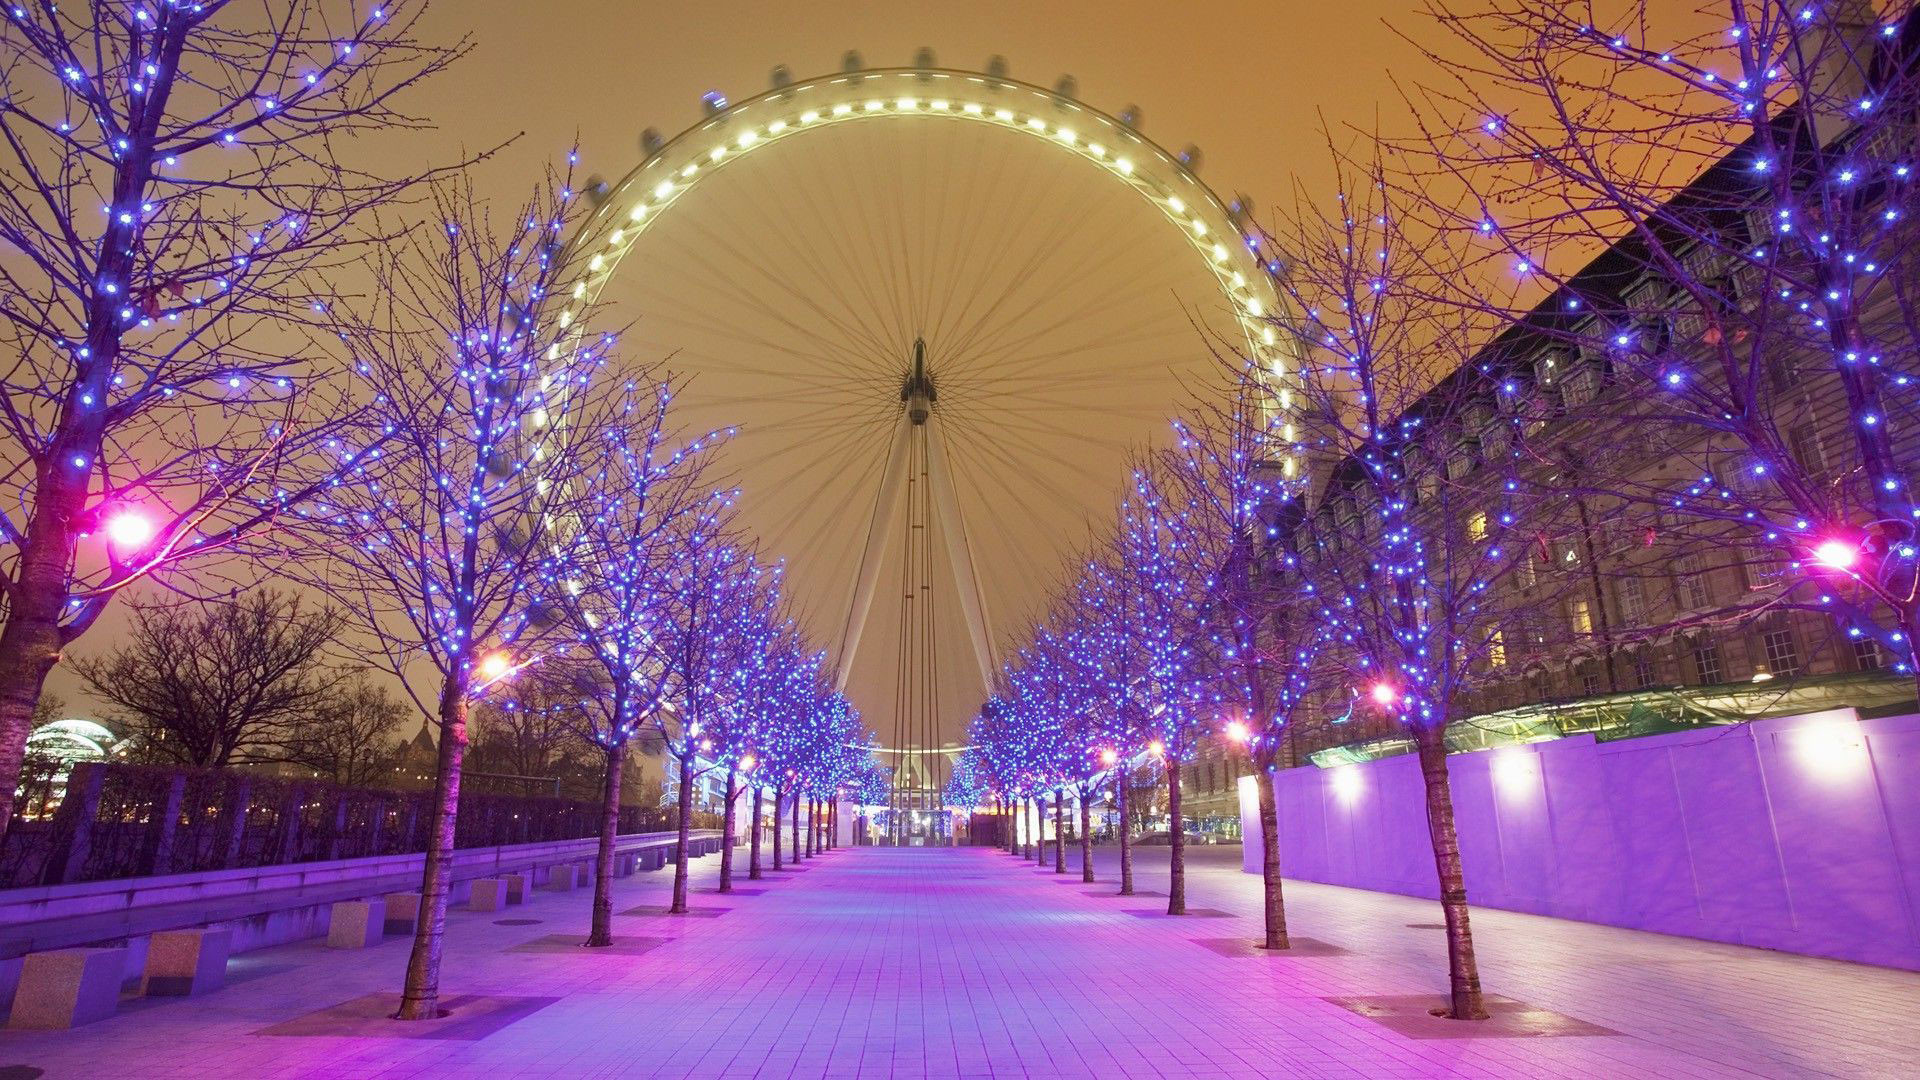 Hd pics photos attractive city lights london eye tree lights giant wheel hd quality desktop background